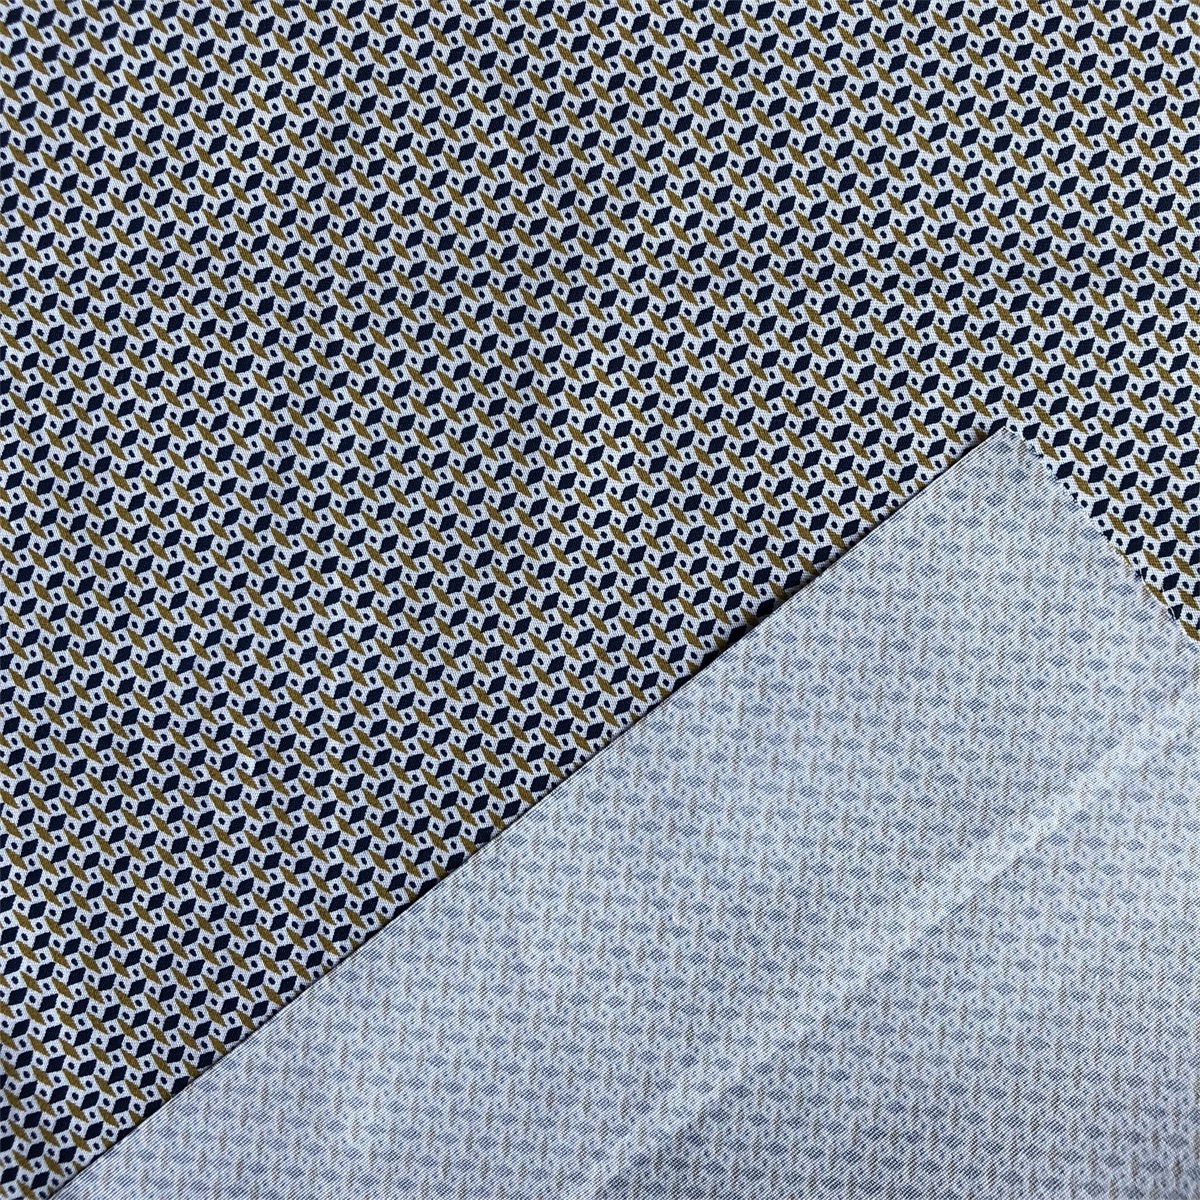 China fashionable pattern Spandex Fabric by compact yarn 98% cotton 2% spandex poplin printed shirts woven stretchy fabric